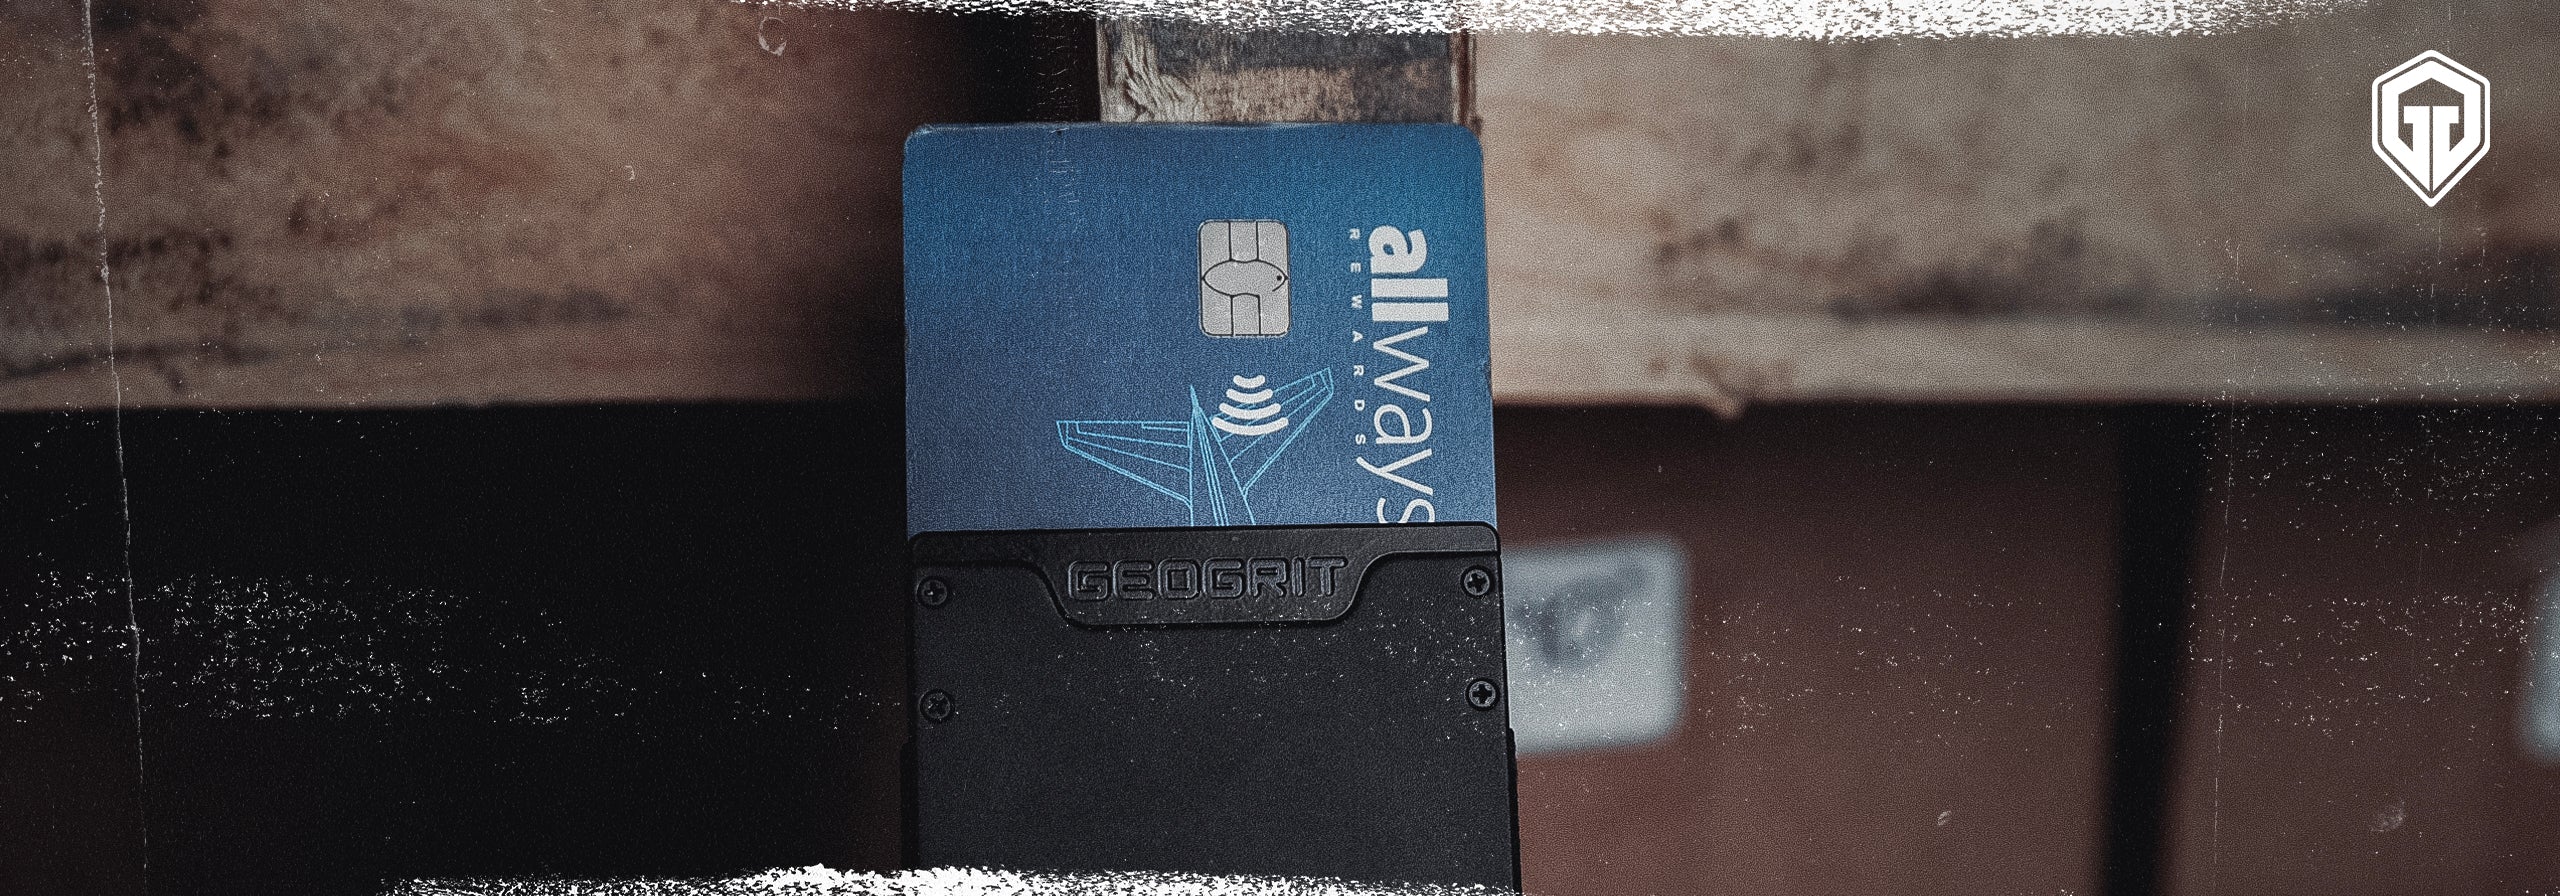 Generic Image - GeoGrit Wallet RFID Chip